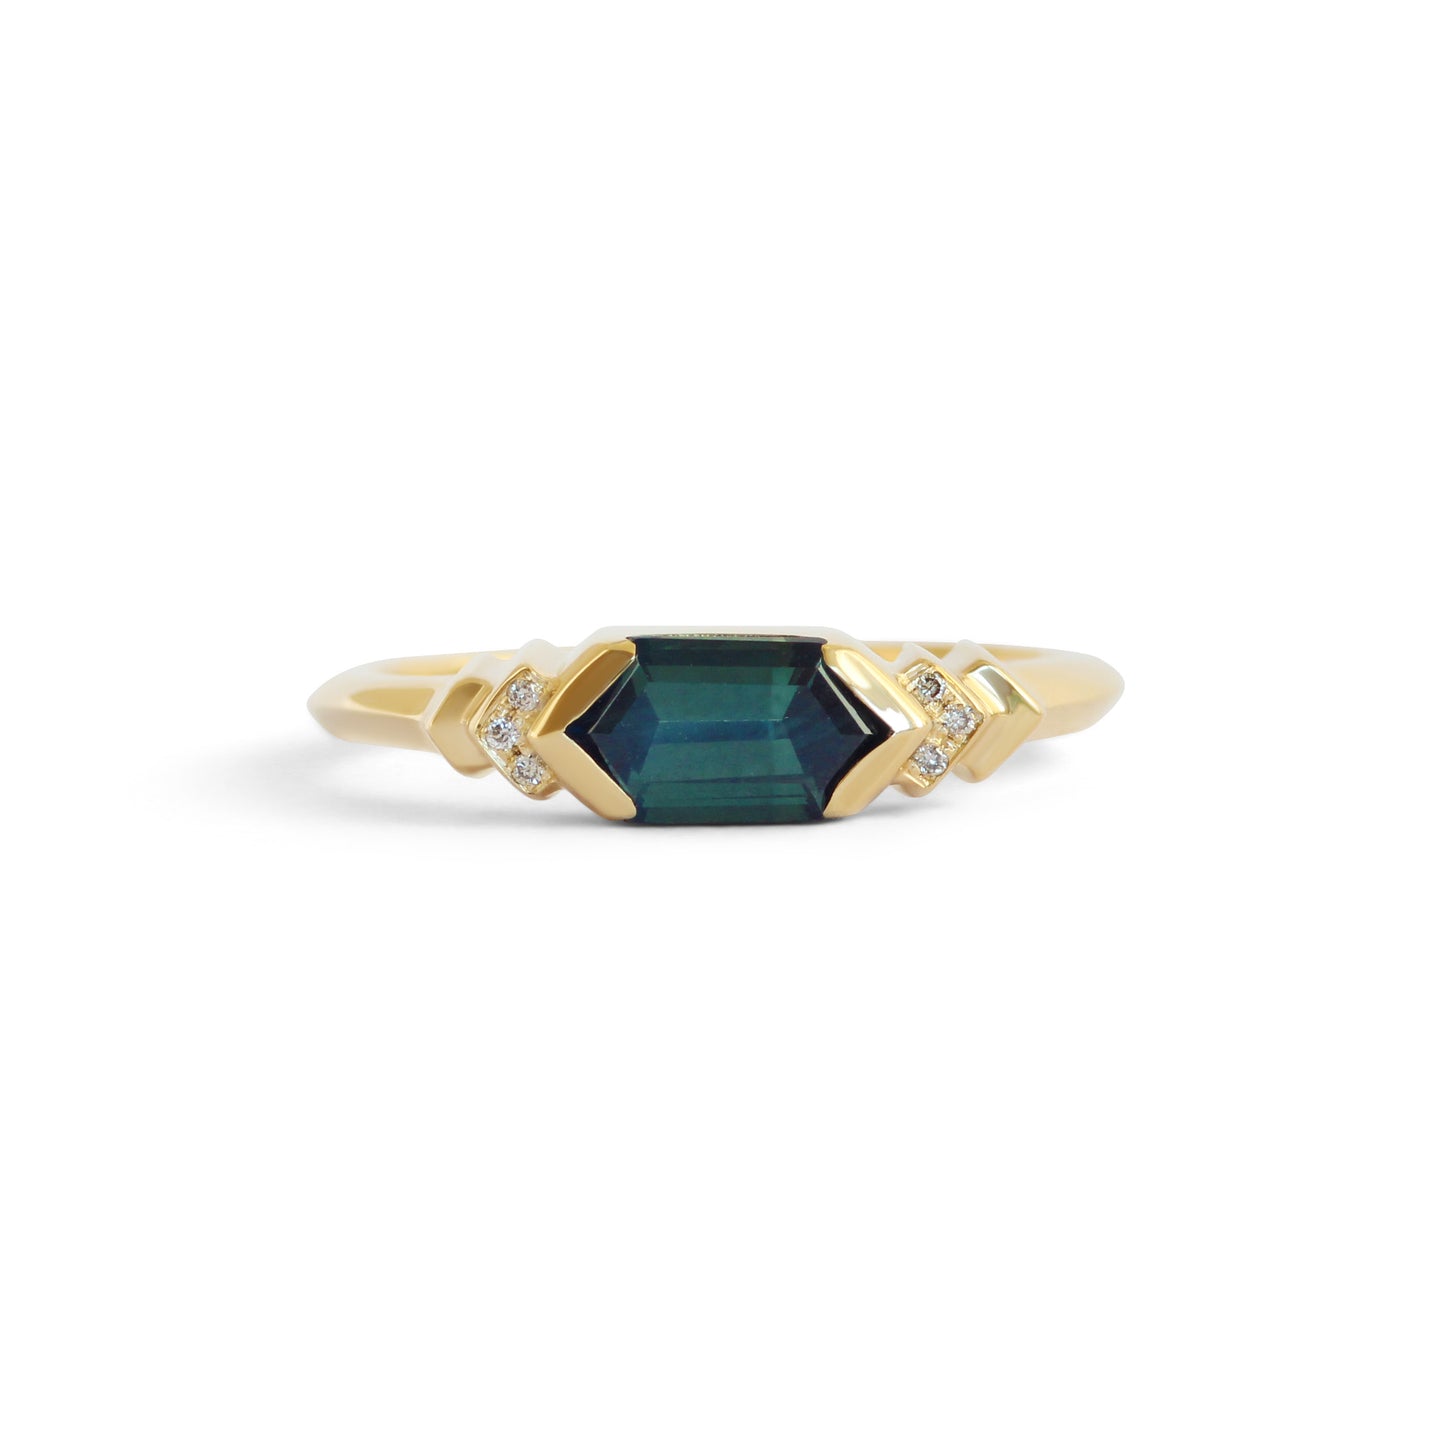 Step Ring / Hexagon Sapphire + Champagne Diamonds - Goldpoint Studio - Greenpoint, Brooklyn - Fine Jewelry